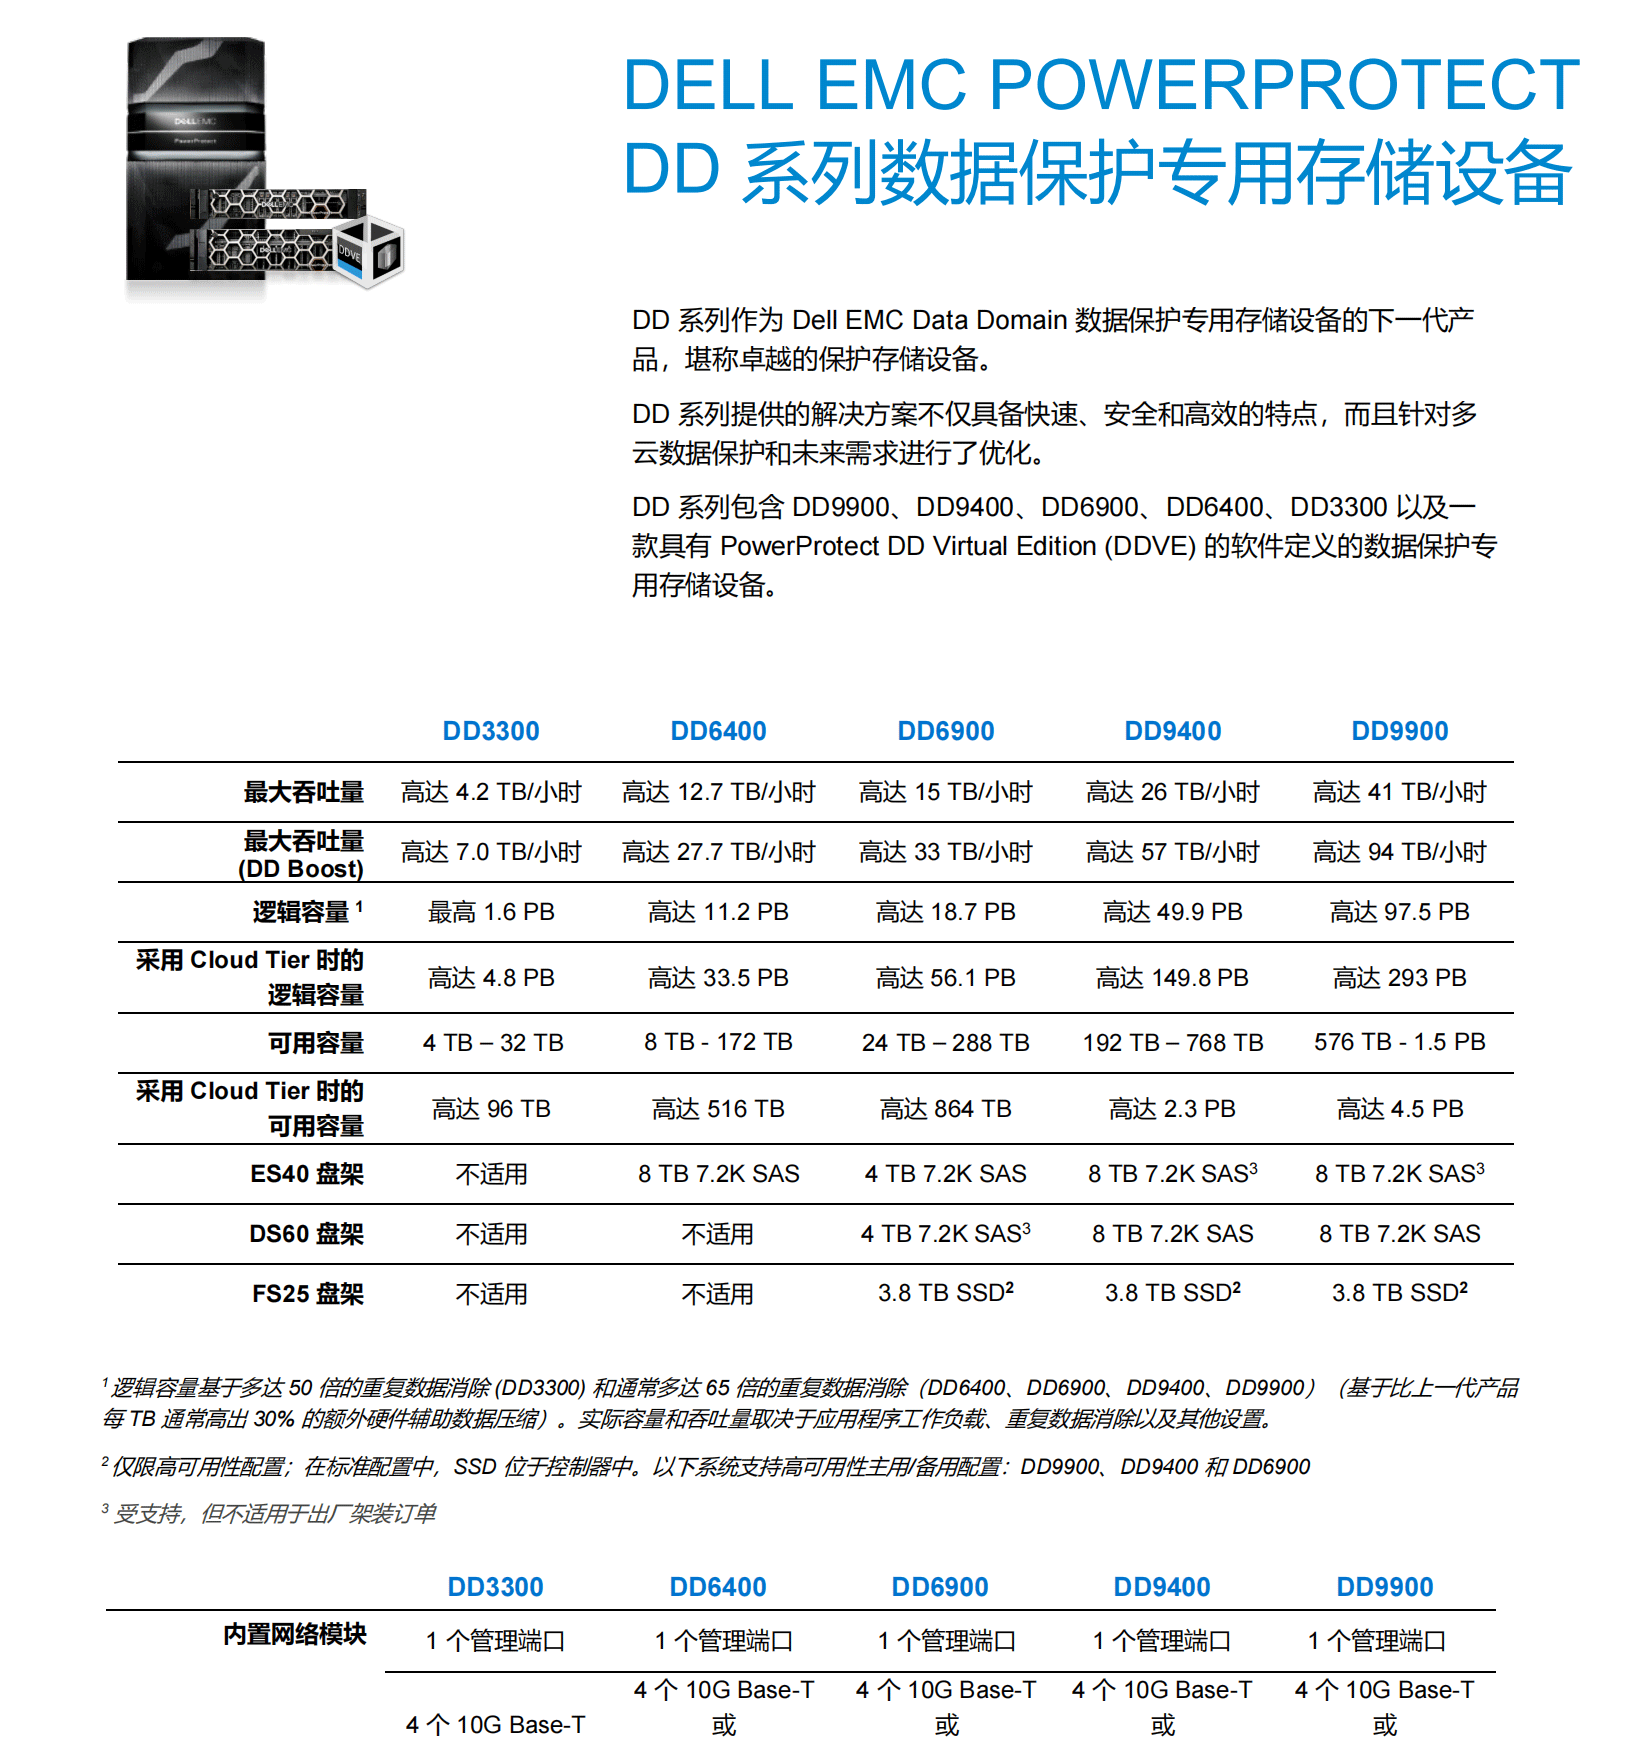 PowerProtect DDVE* (96 TB) 存储